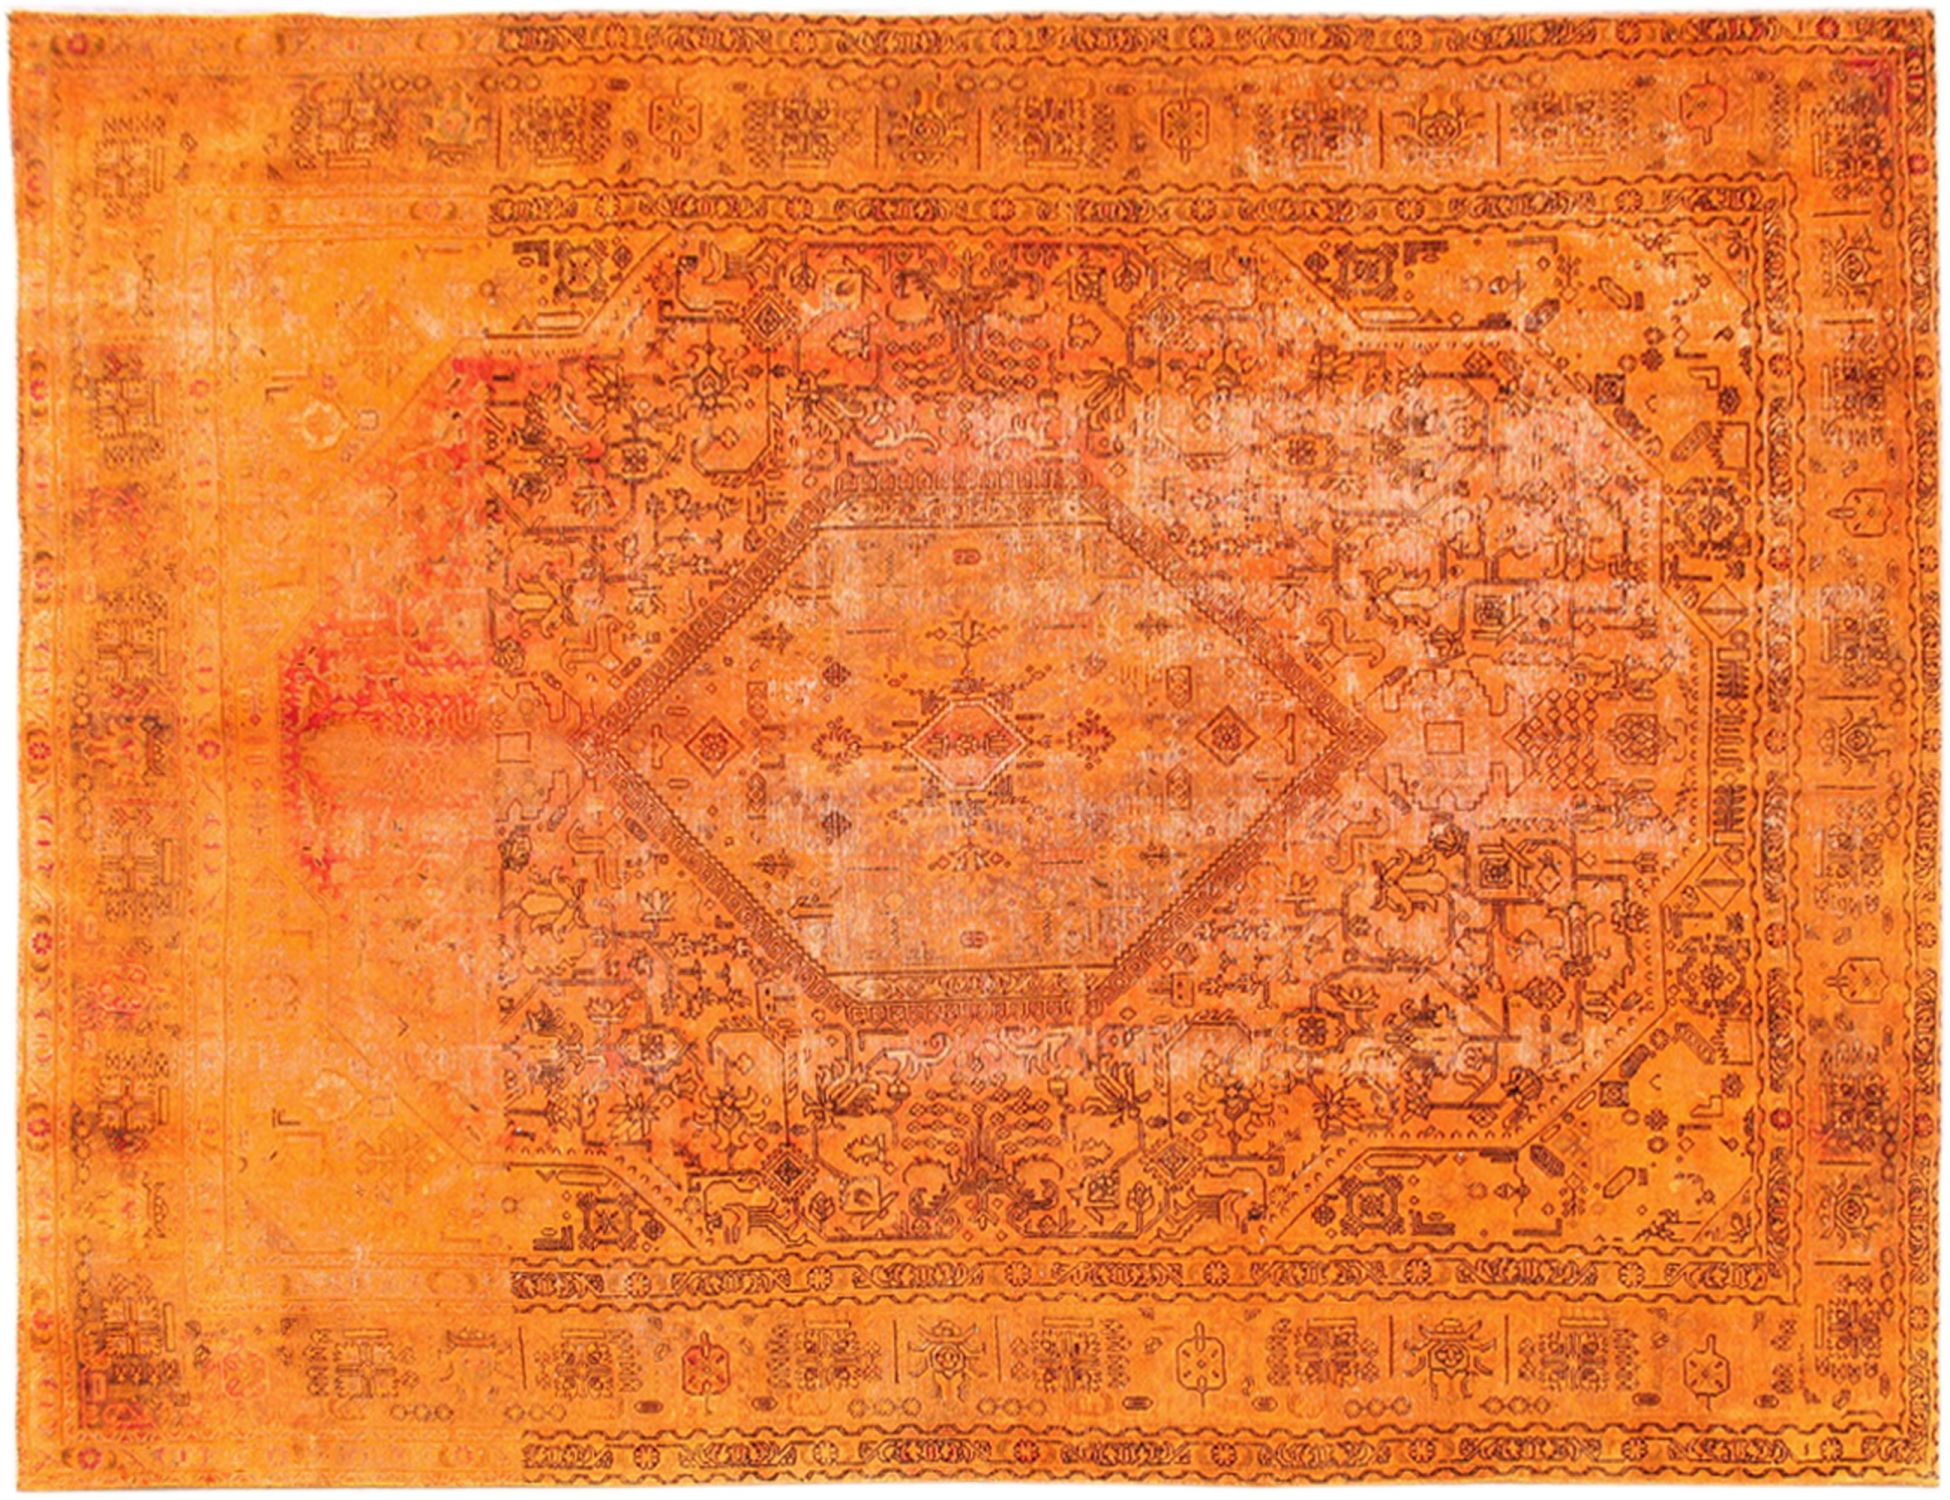 Persian Vintage Carpet  orange  <br/>400 x 290 cm